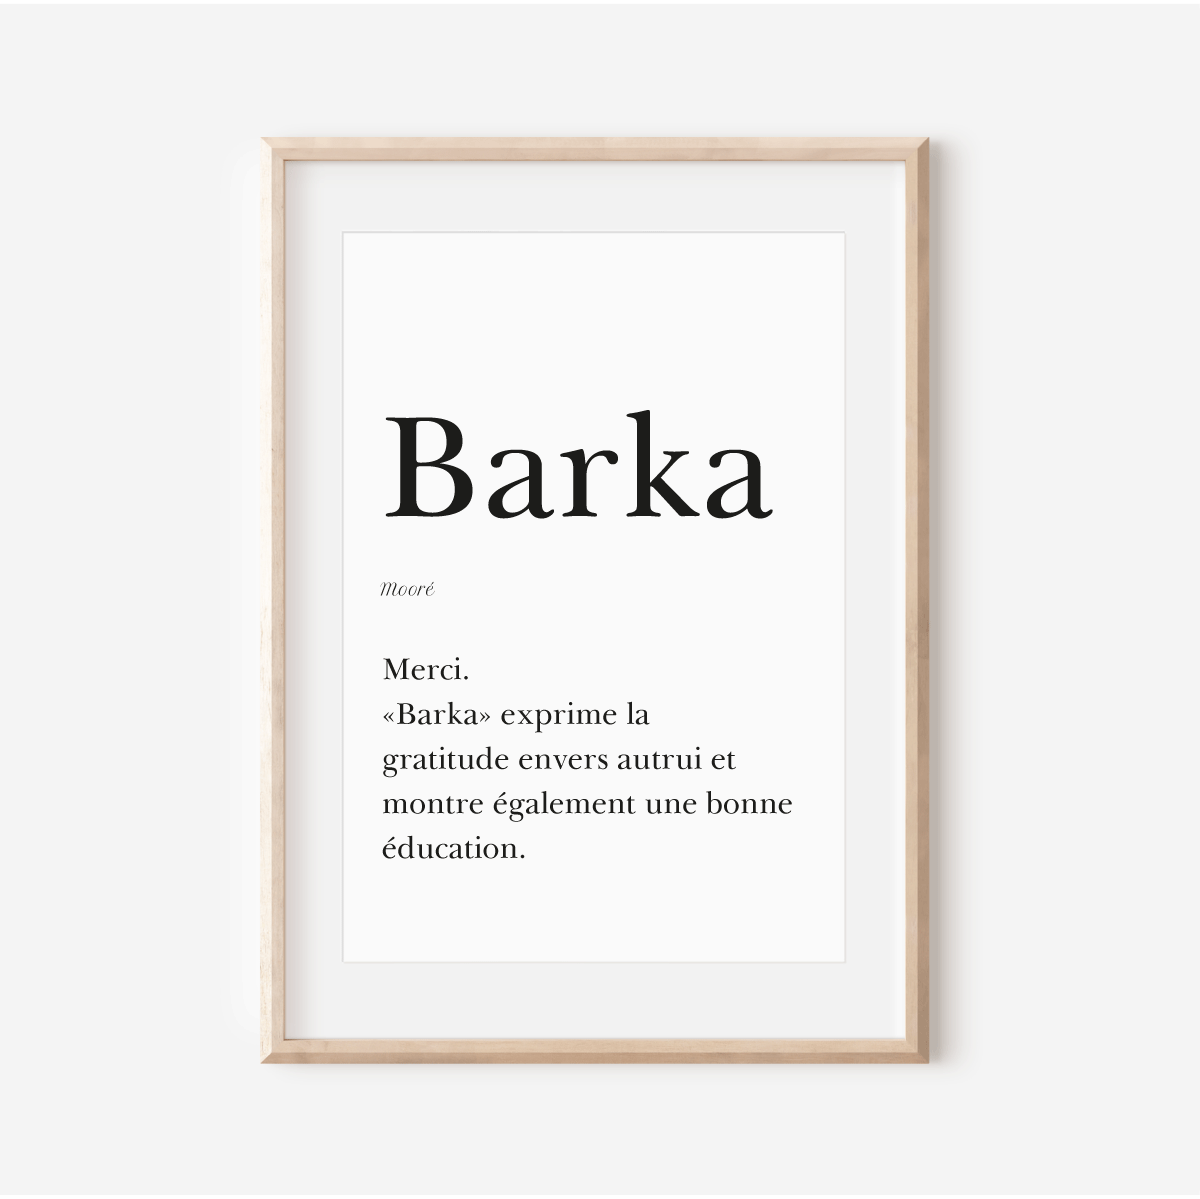 Merci en Mooré - Affiche "Barka"